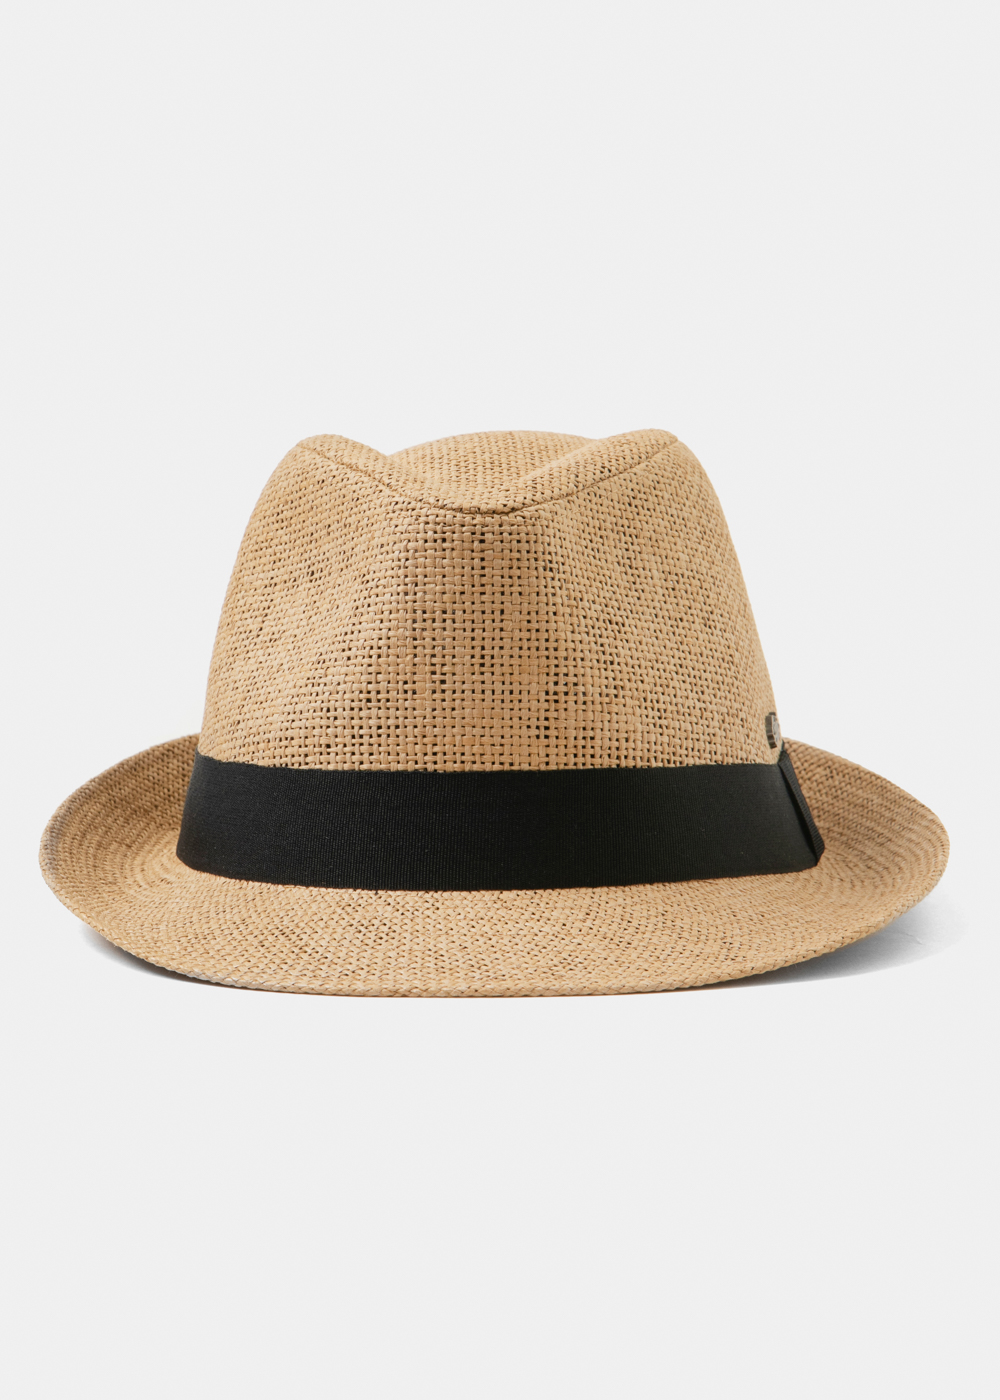 Brown Fedora Hat w/ black hatband